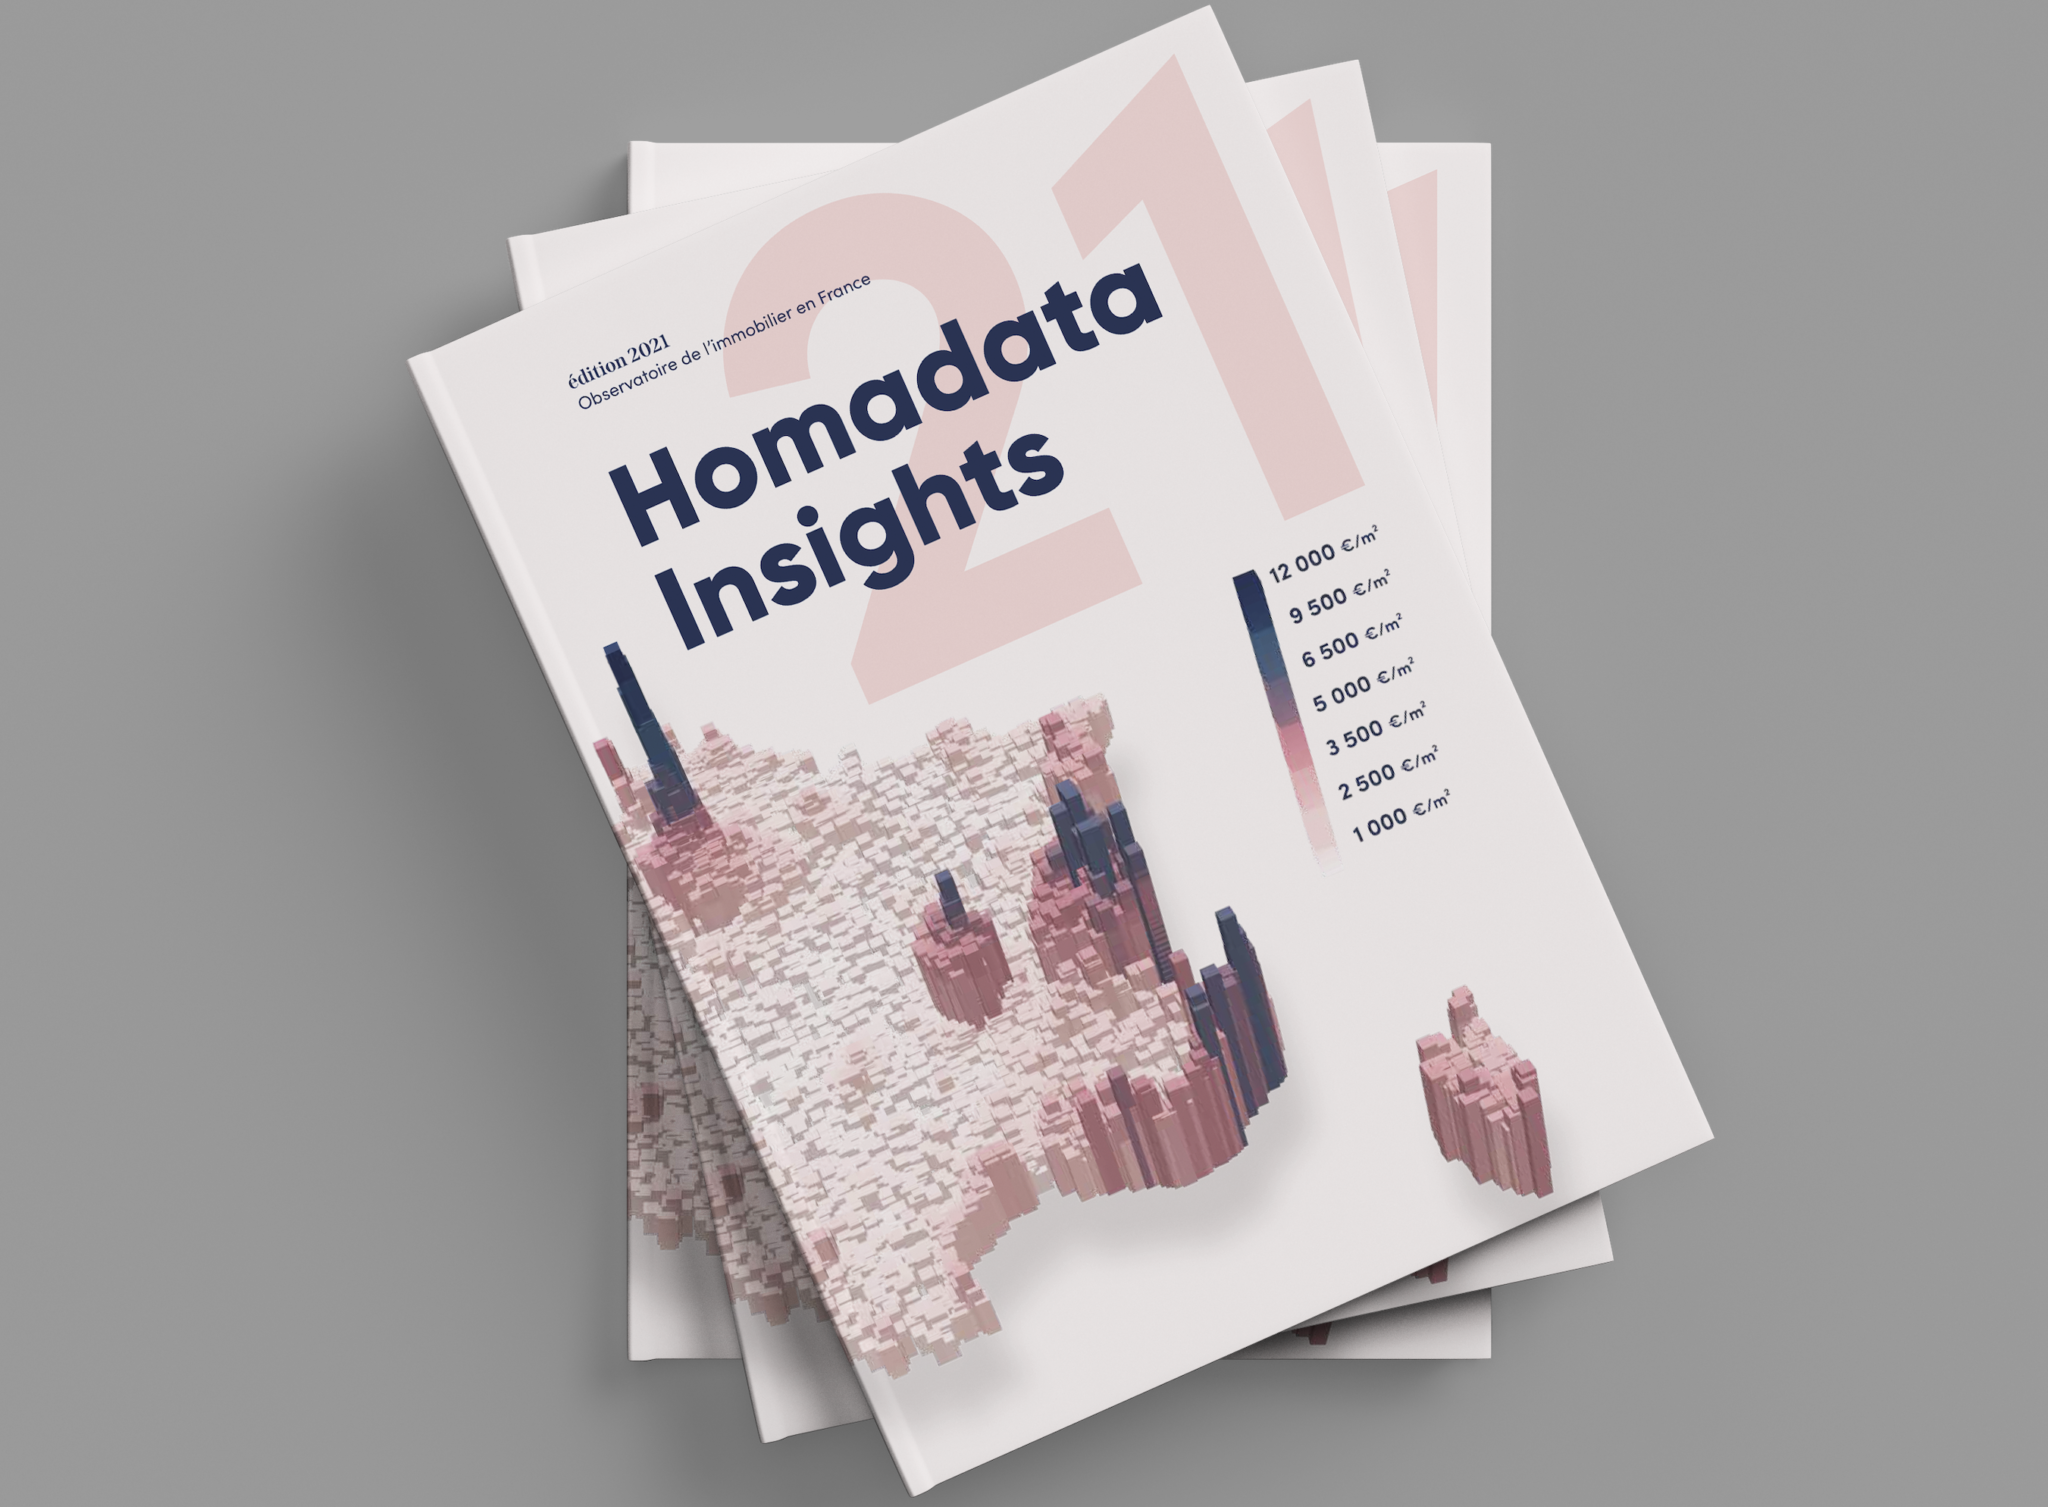 Homadata Insights